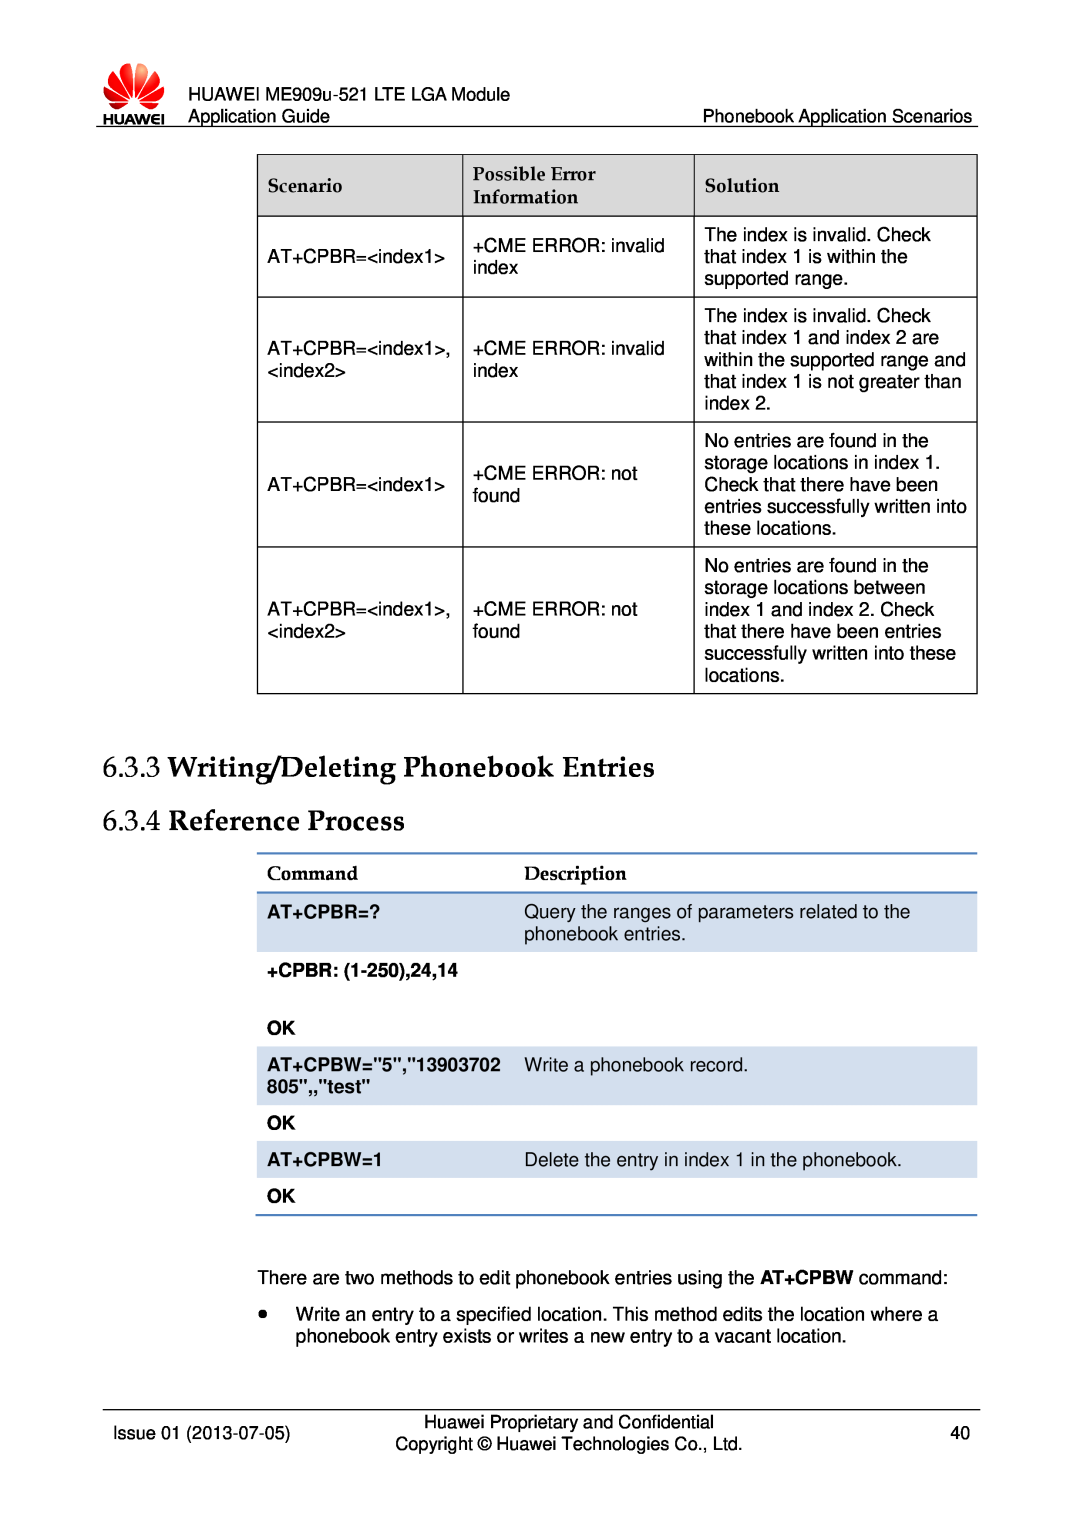 Huawei ME909u-521 manual Writing/Deleting Phonebook Entries 6.3.4 Reference Process 